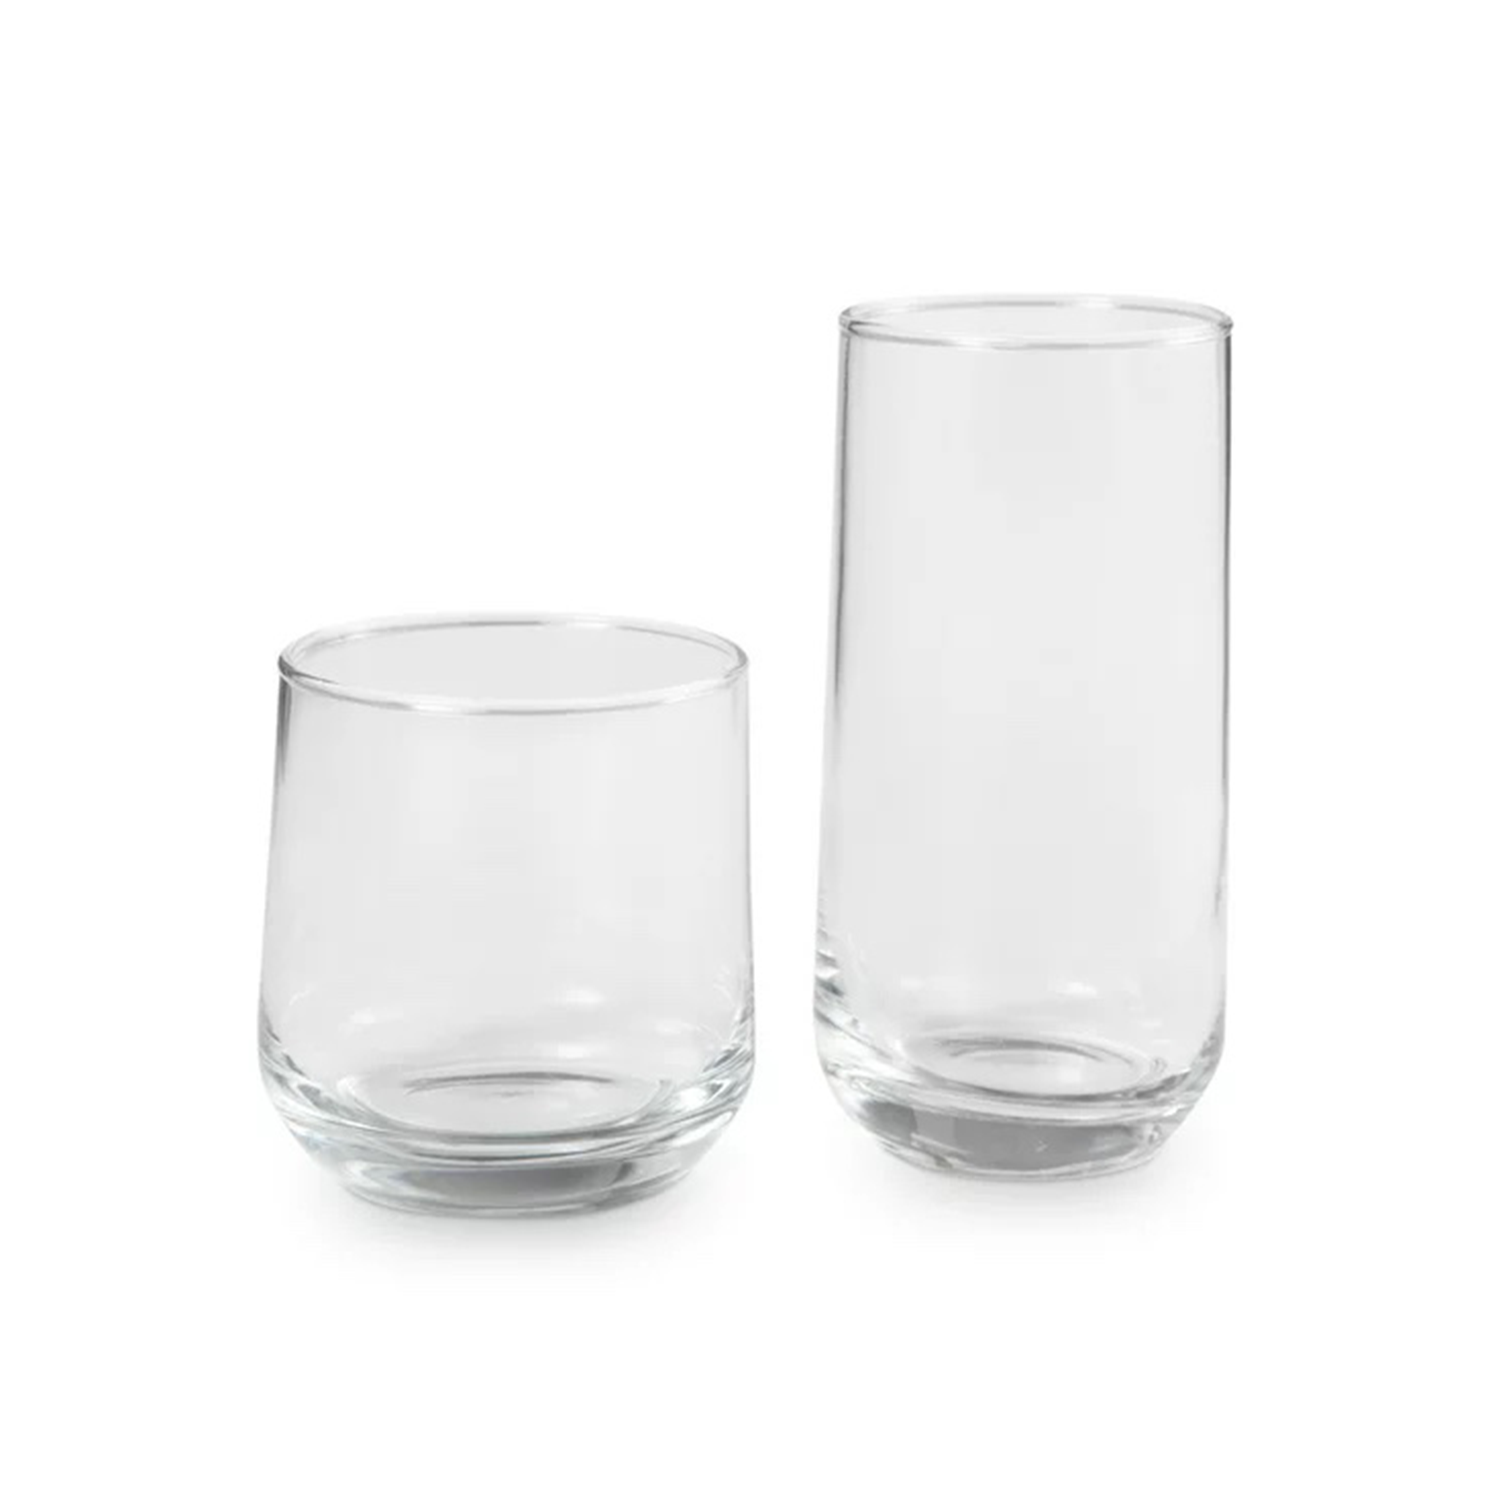 https://www.domino.com/uploads/2021/12/28/drinking-glasses-walmart-set.png?auto=webp&optimize=high&width=100